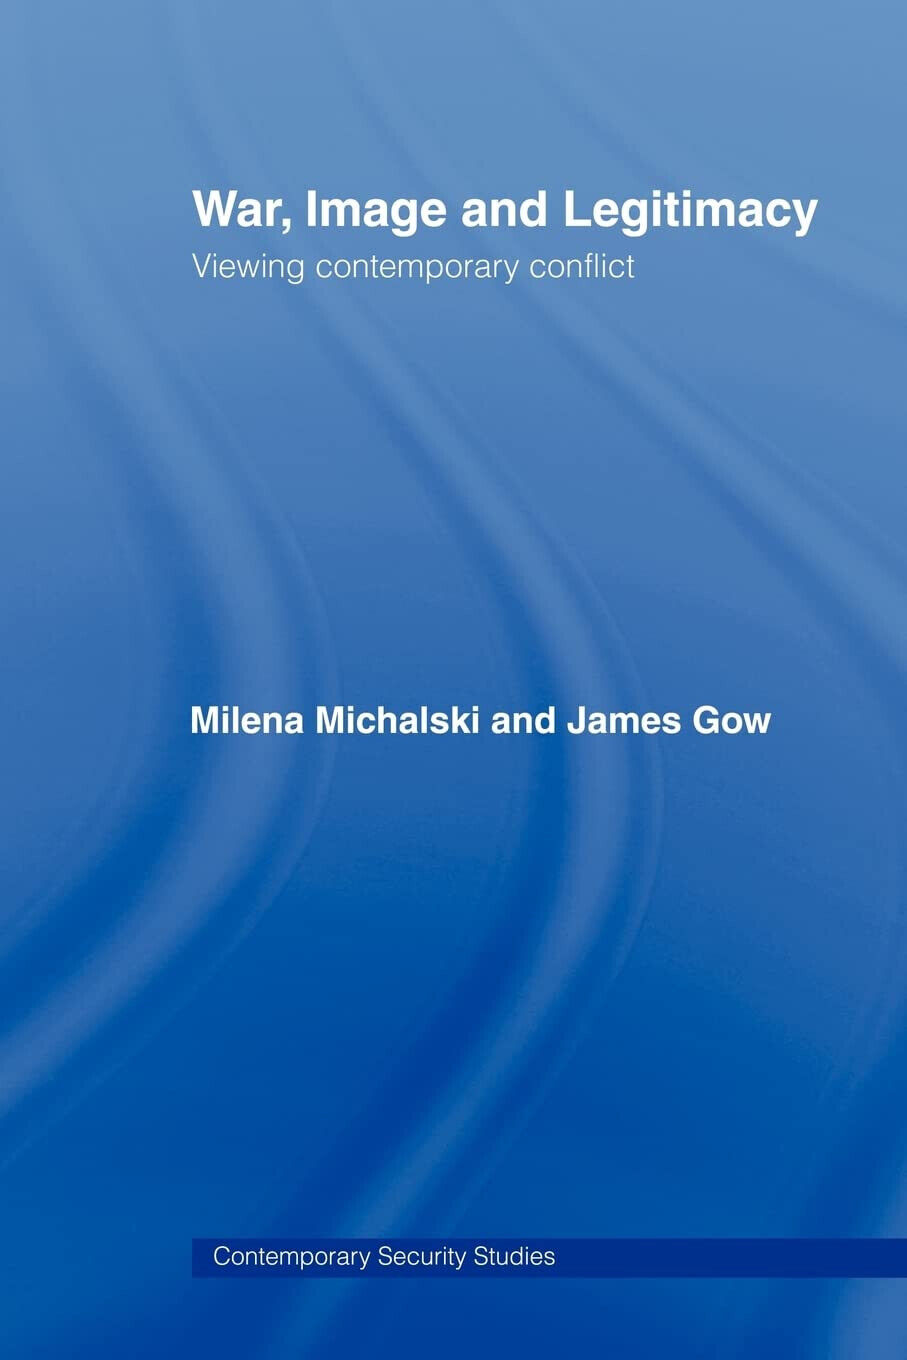 War, Image and Legitimacy - James Gow - Routledge, 2008 libro usato